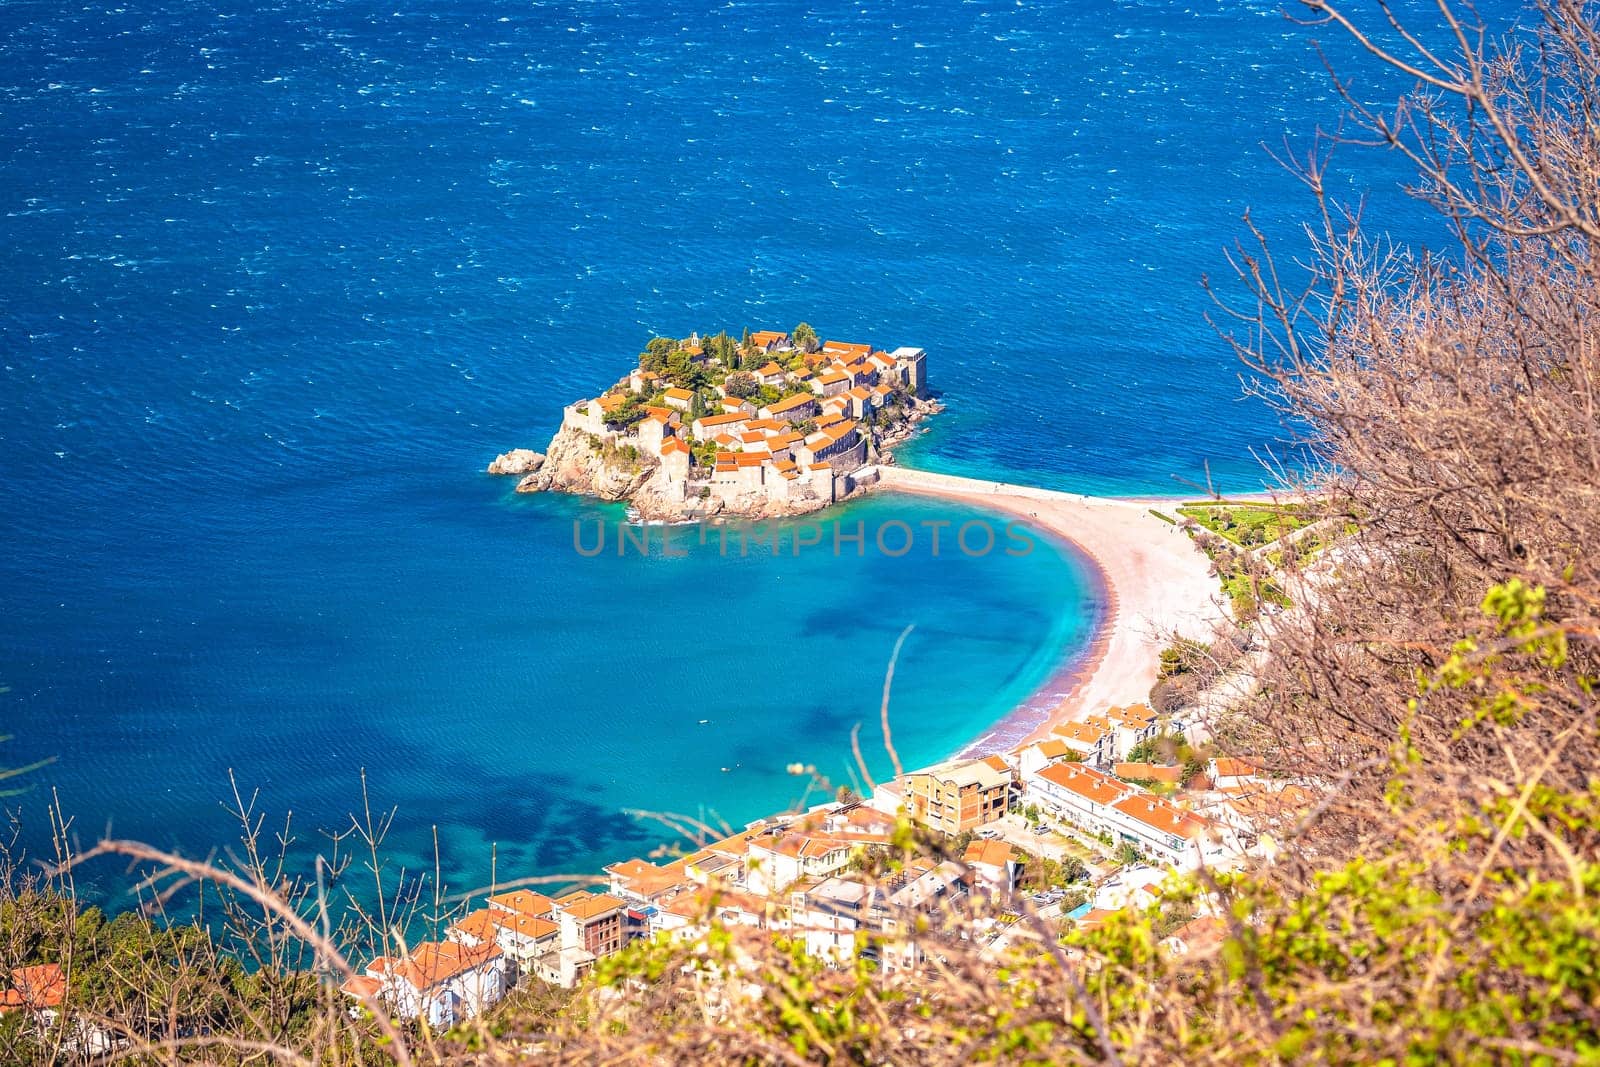 Sveti Stefan historic island village and waterfront view, archipelago of Montenegro